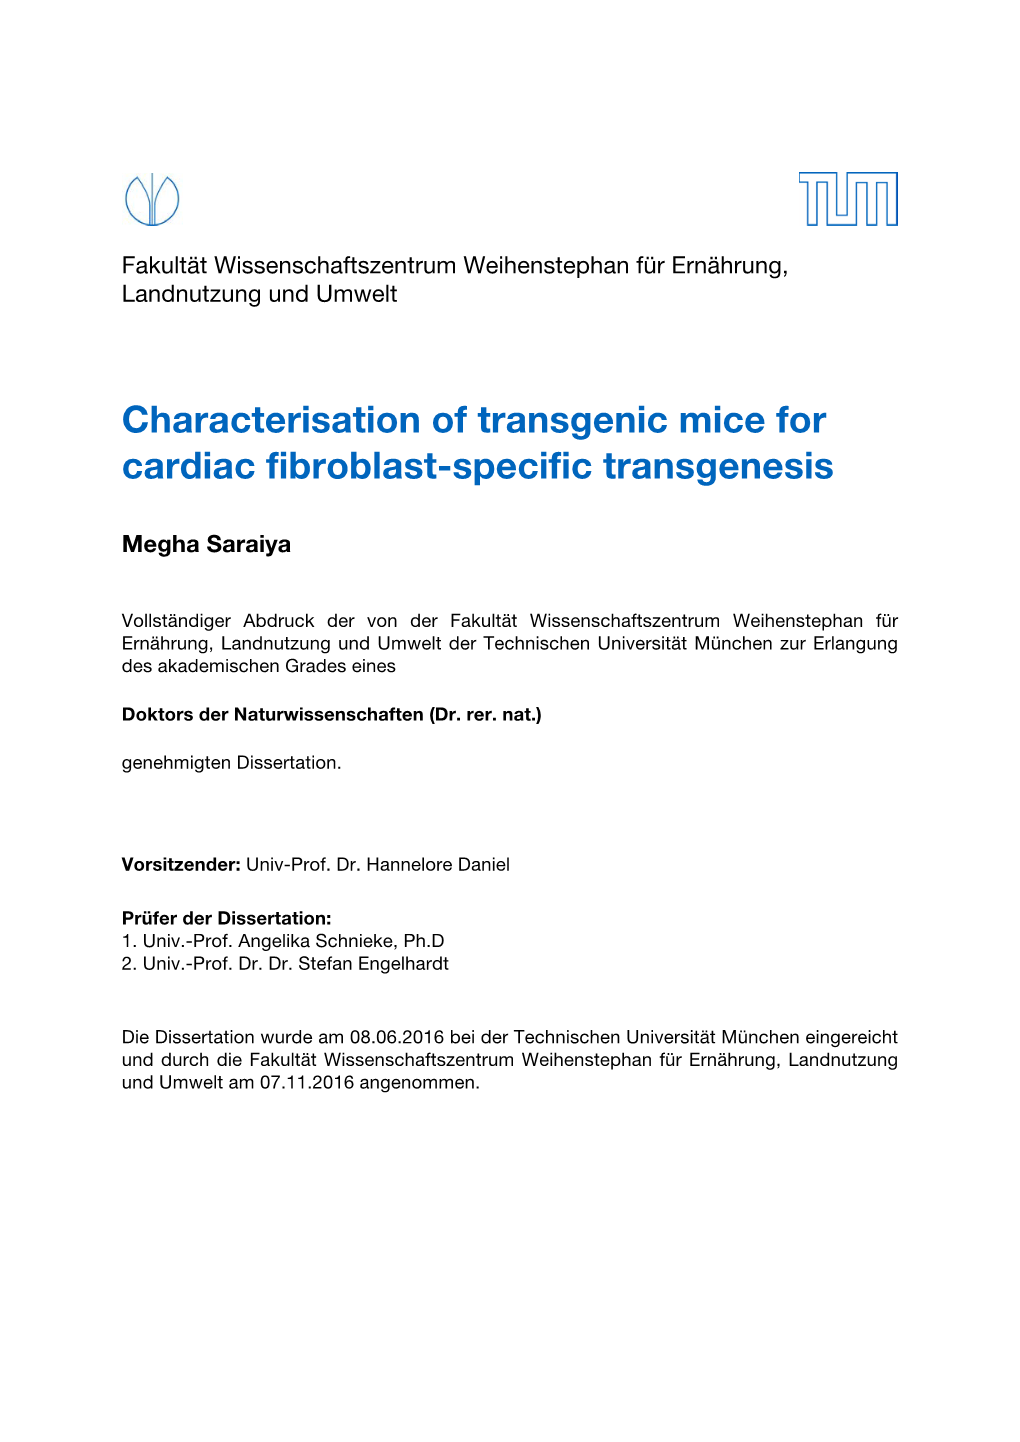 Characterisation of Transgenic Mice for Cardiac Fibroblast-Specific Transgenesis